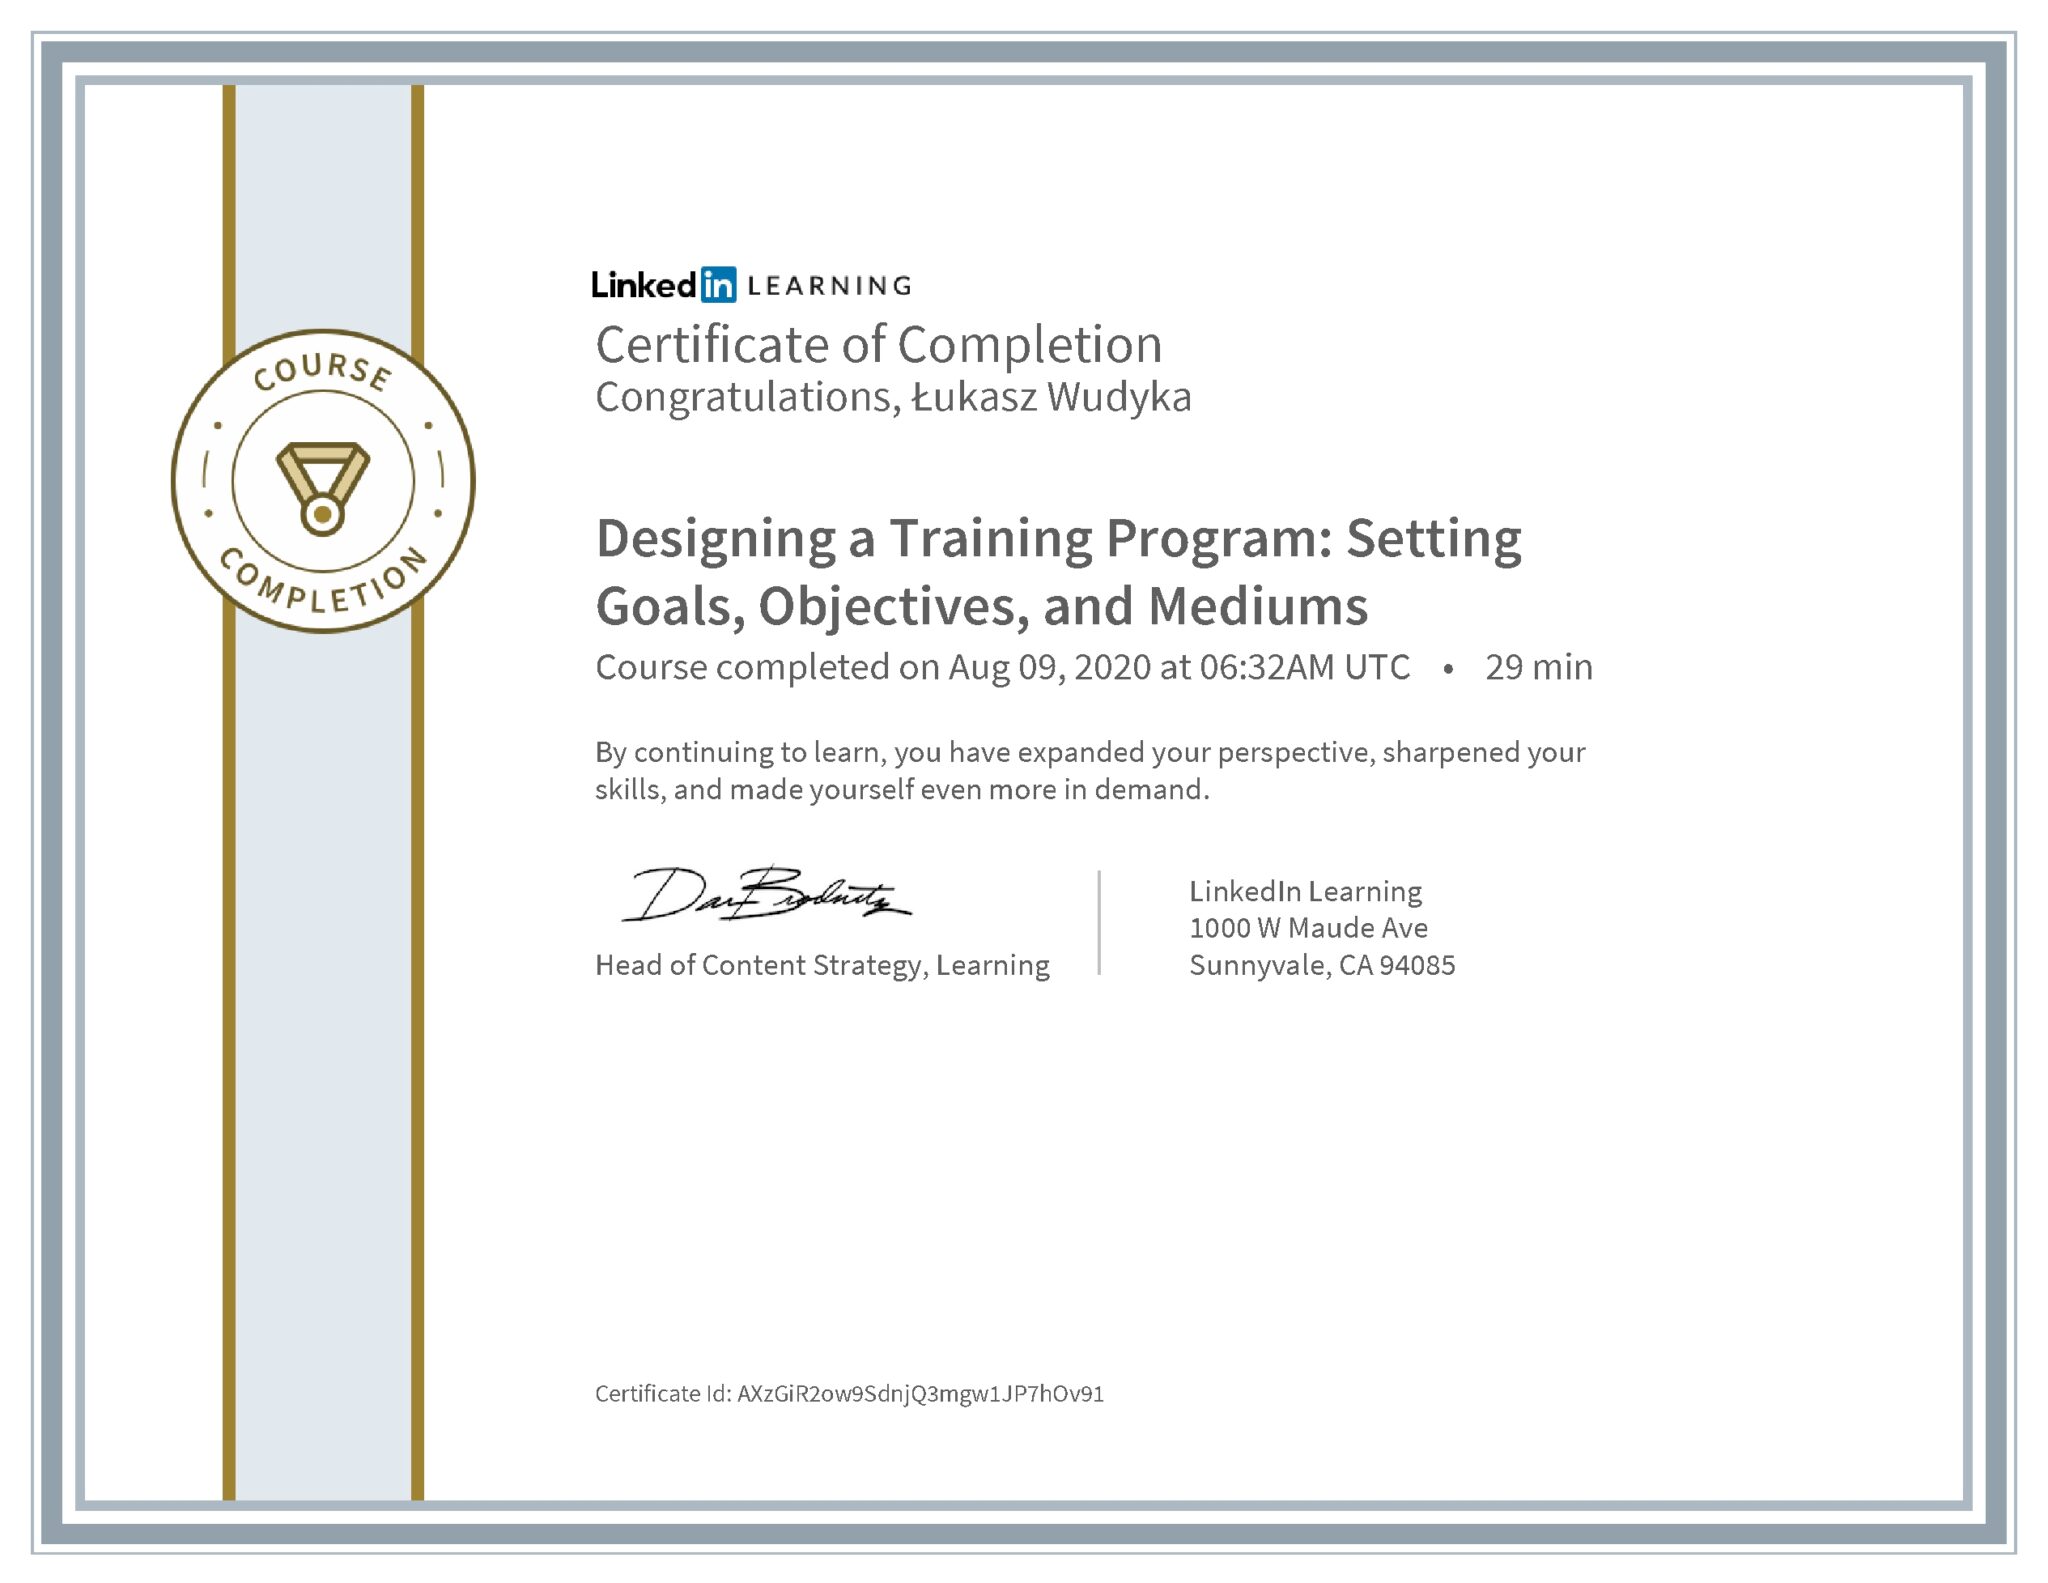 Łukasz Wudyka certyfikat LinkedIn Designing a Training Program: Setting Goals, Objectives, and Mediums